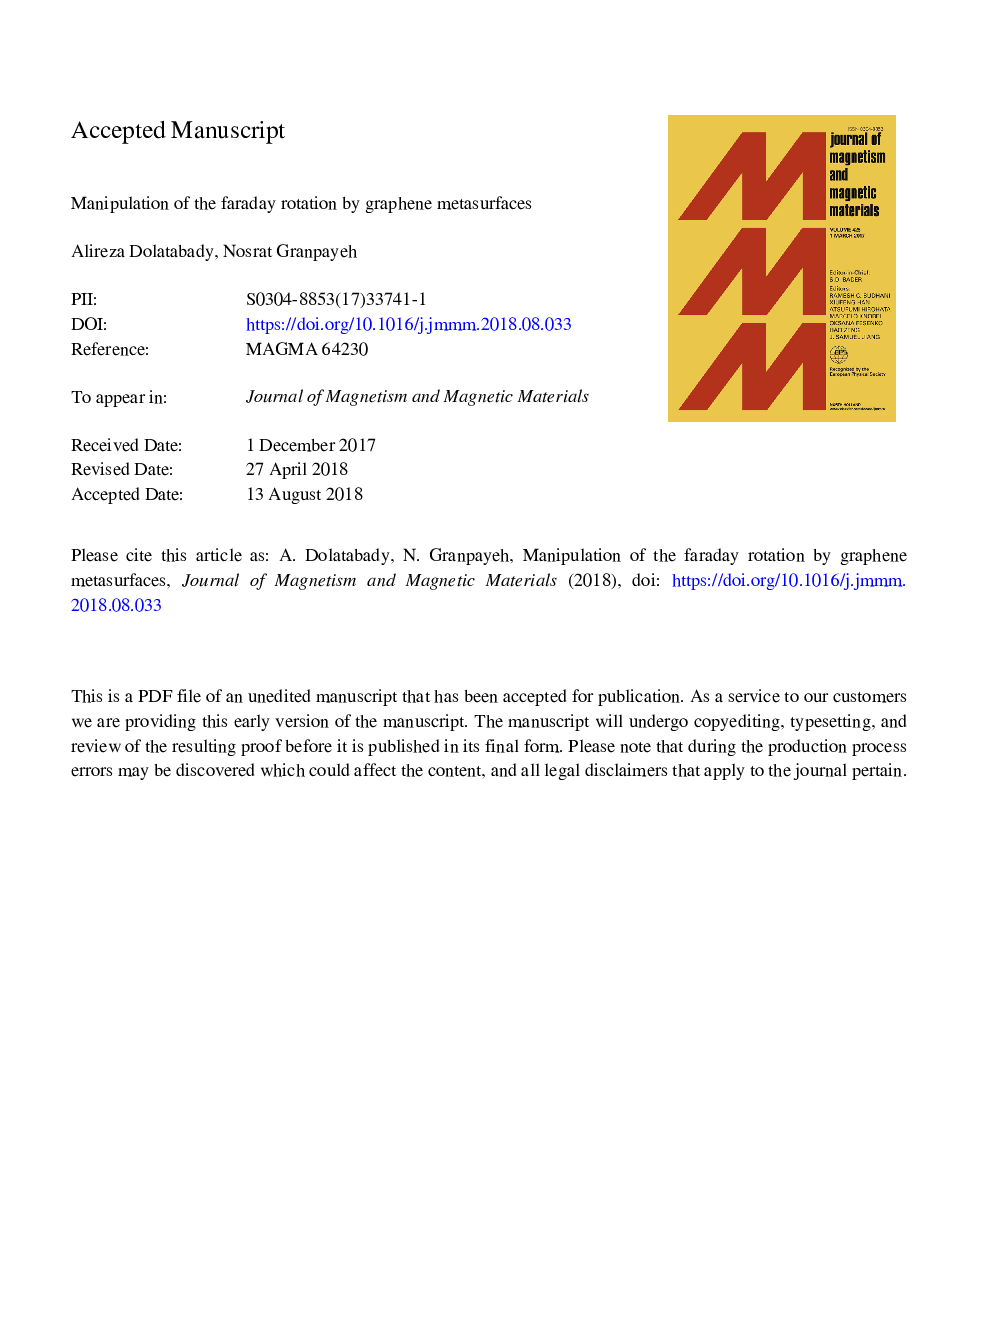 Manipulation of the Faraday rotation by graphene metasurfaces